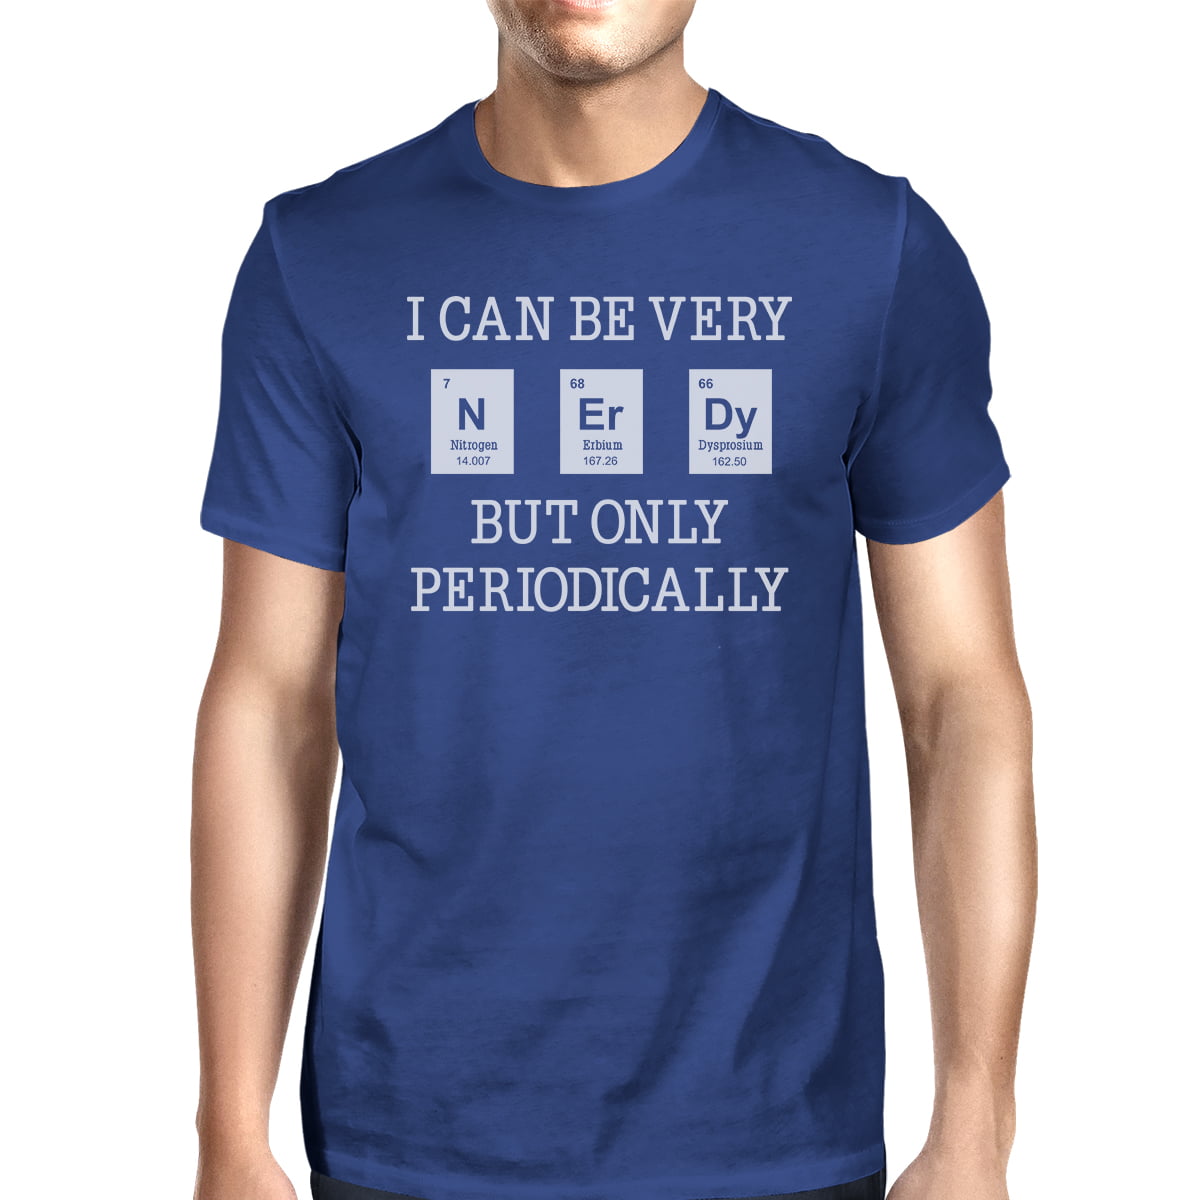 I Wear This Periodically Funny Novelty T-Shirt Mens tee TShirt 